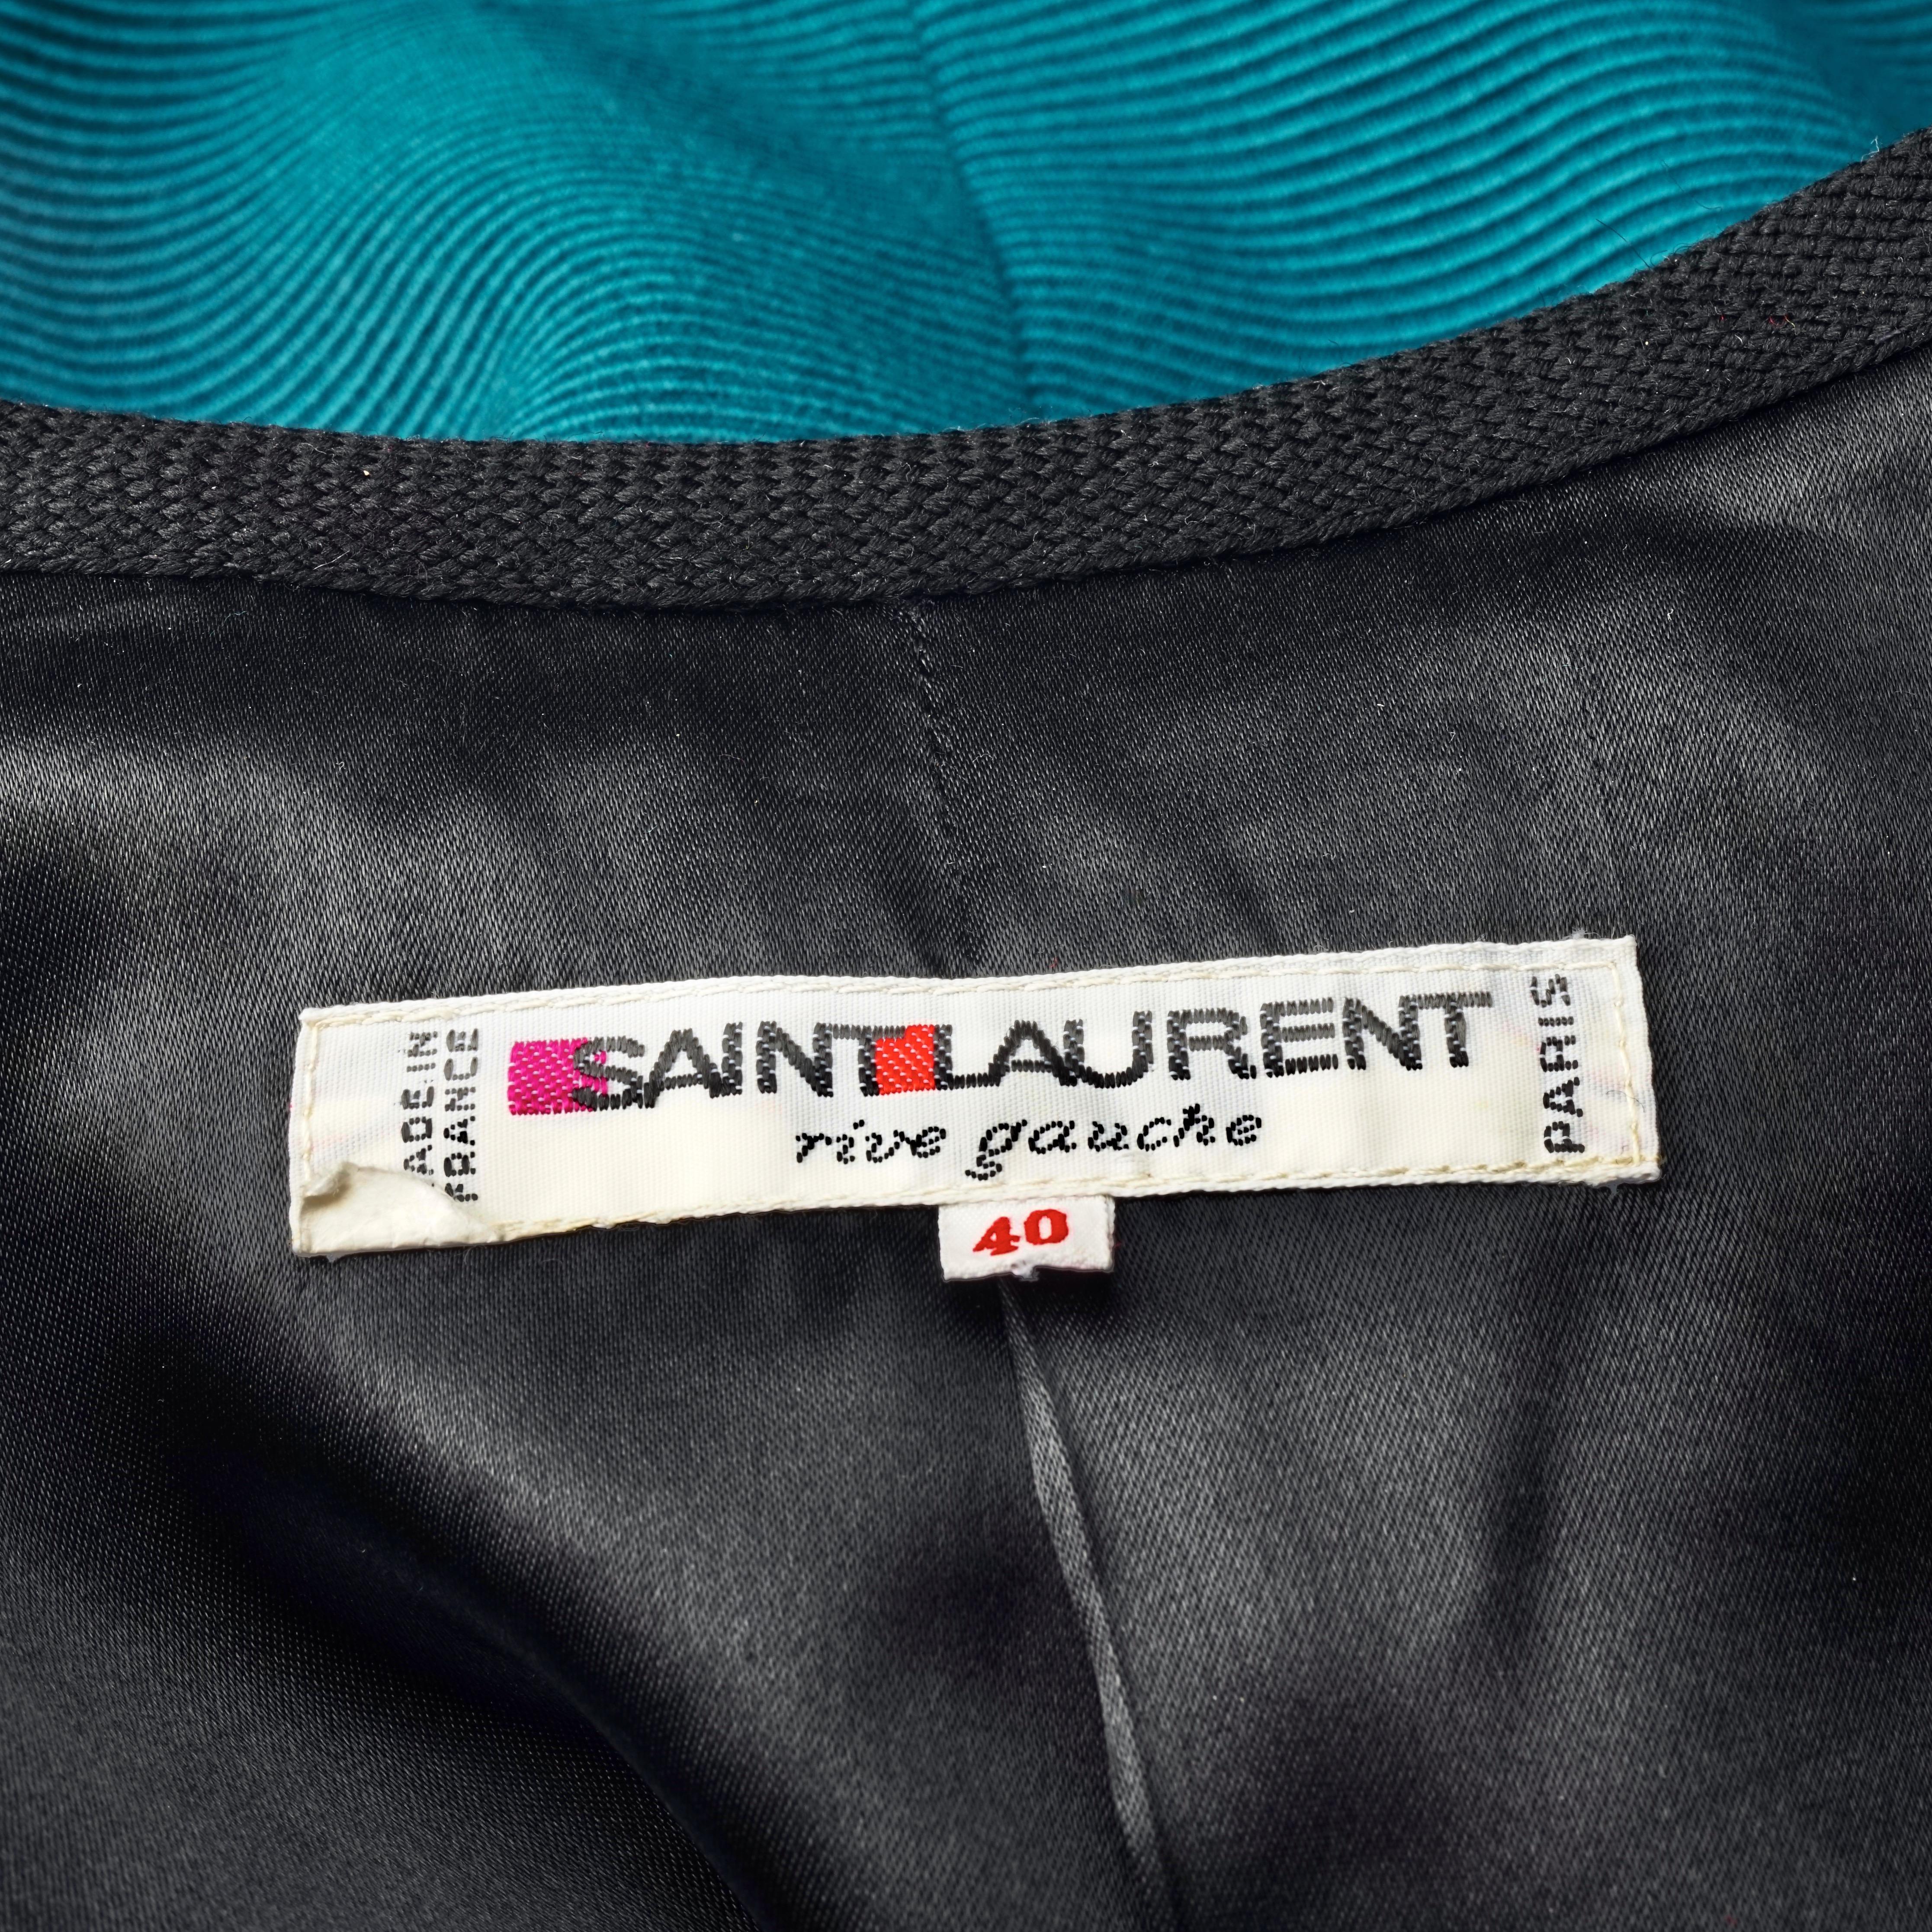 Vintage YVES SAINT LAURENT Ysl Rive Gauche Dark Teal Openwork Cropped Jacket For Sale 5